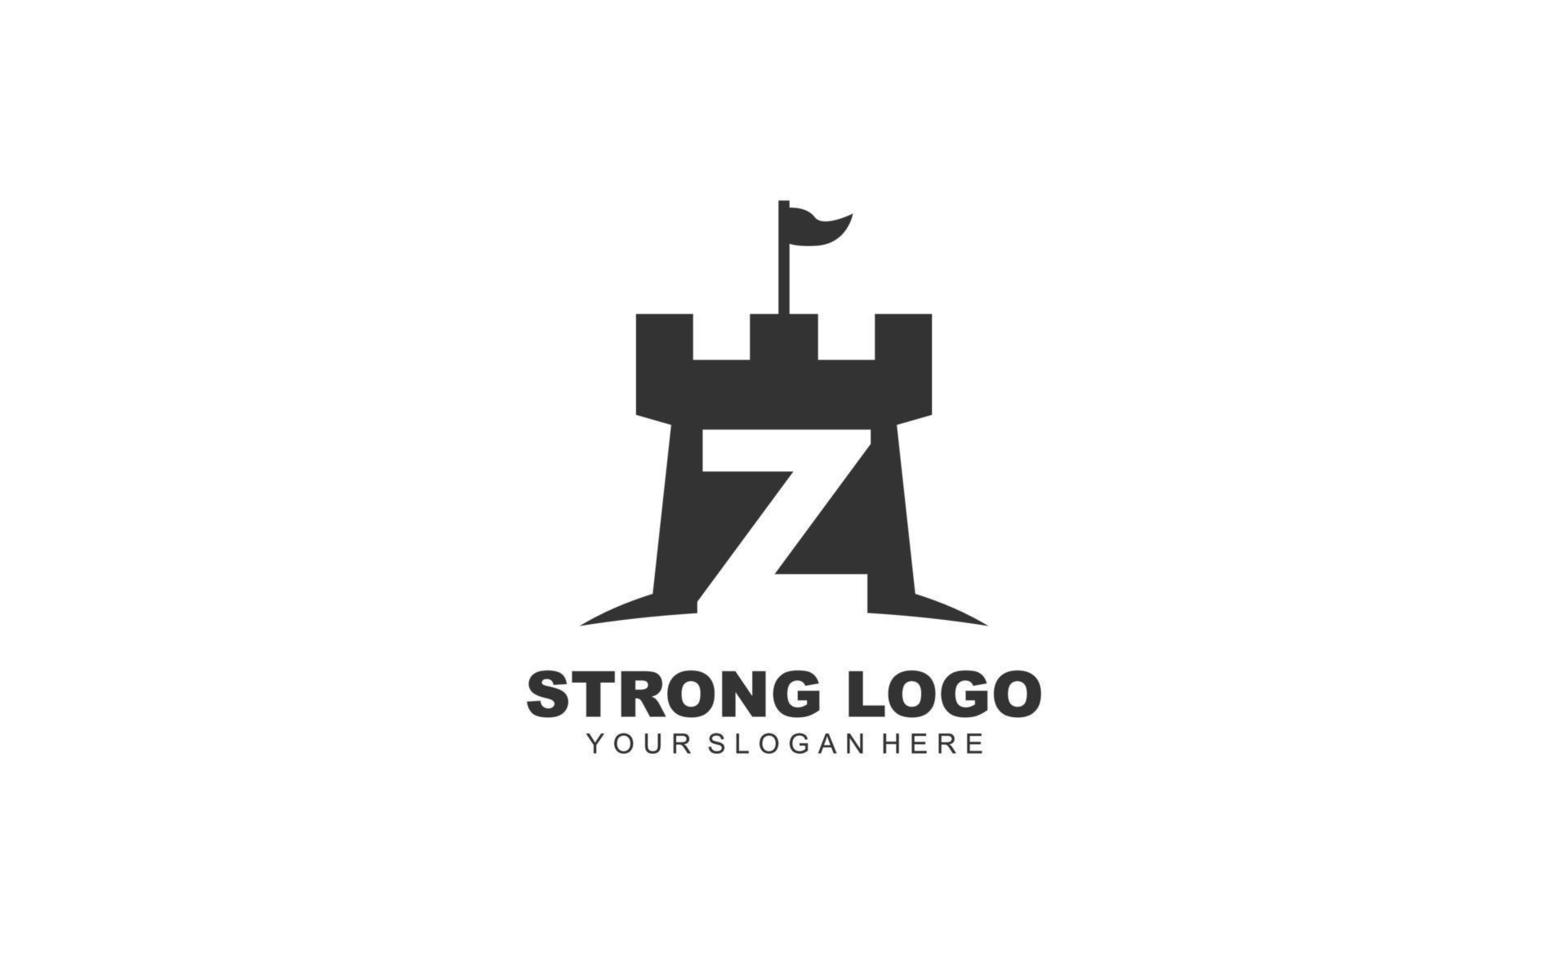 Z FORTRESS logo design inspiration. Vector letter template design for brand.